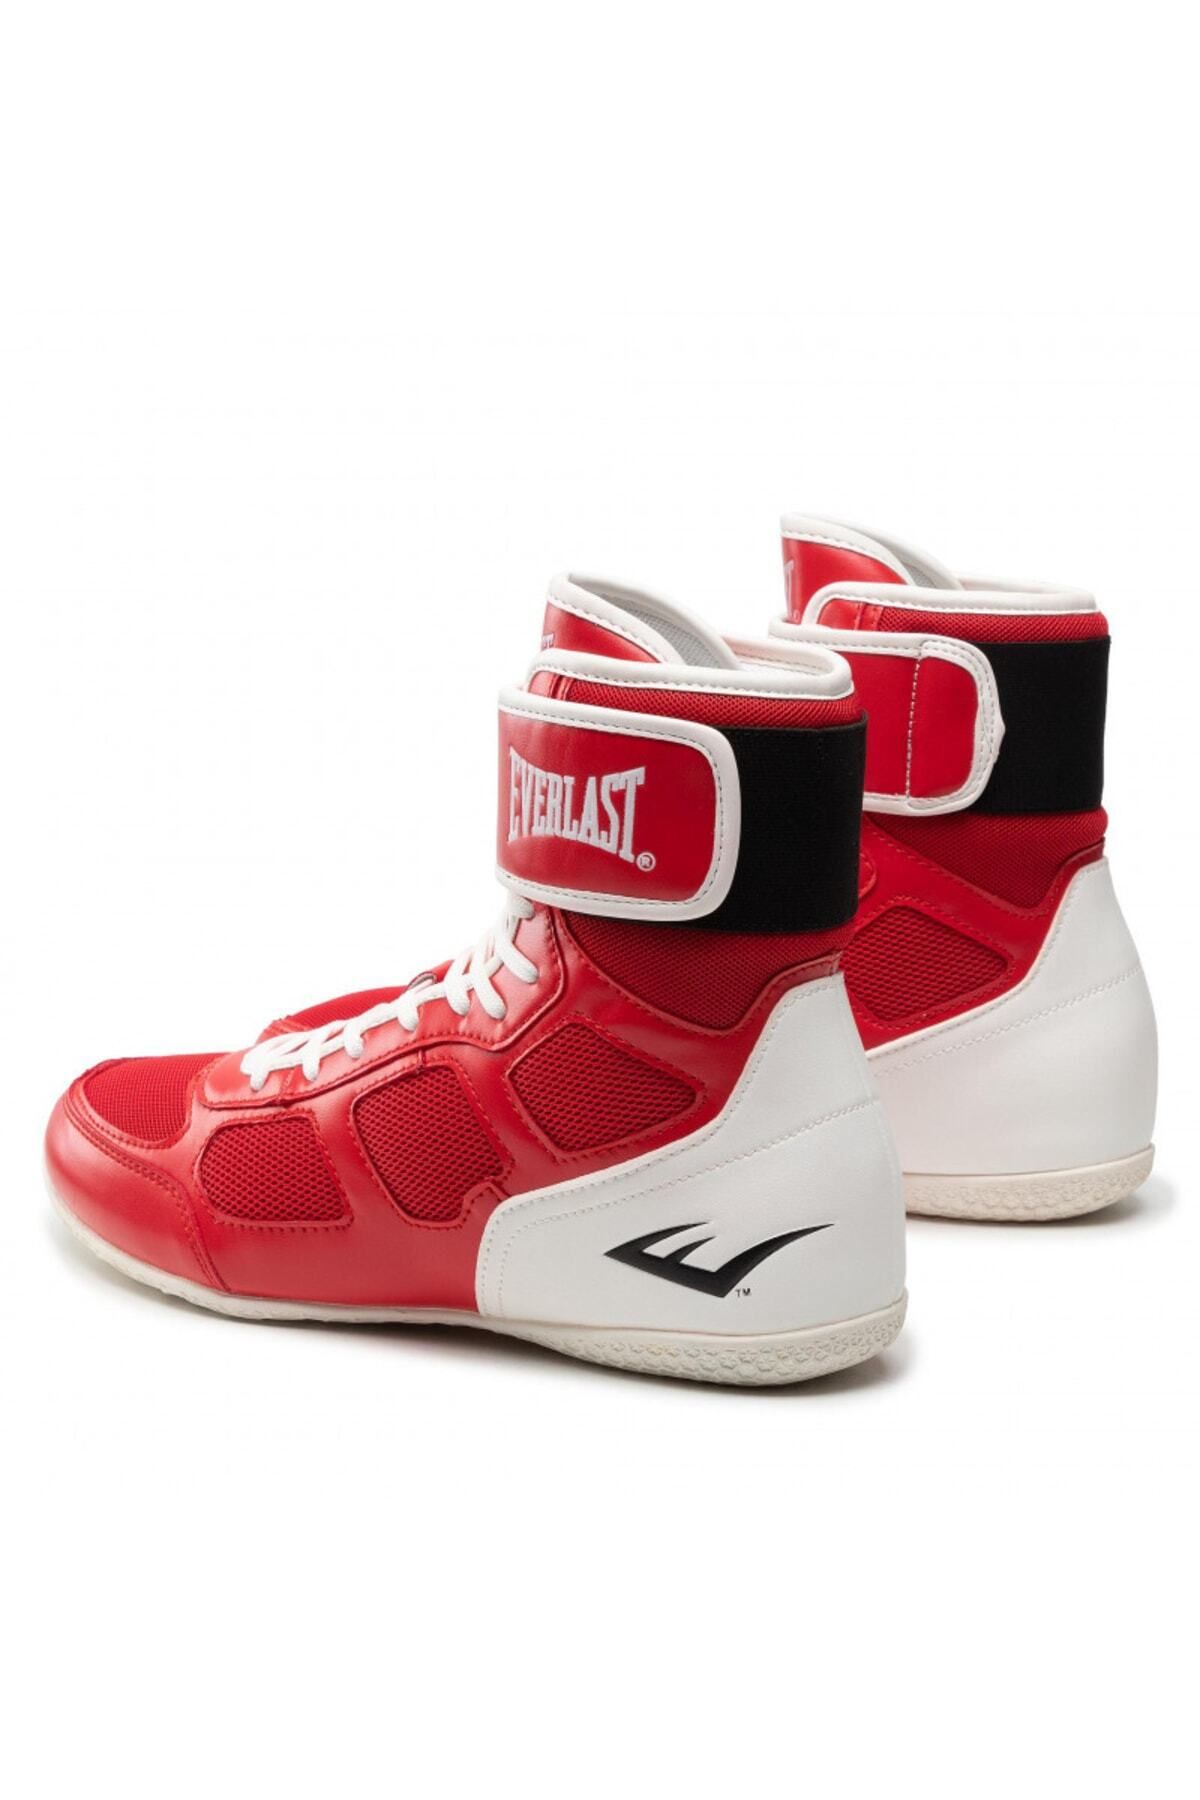 RXN Boxing Shoes, Black, Size 10.5. NEW | eBay